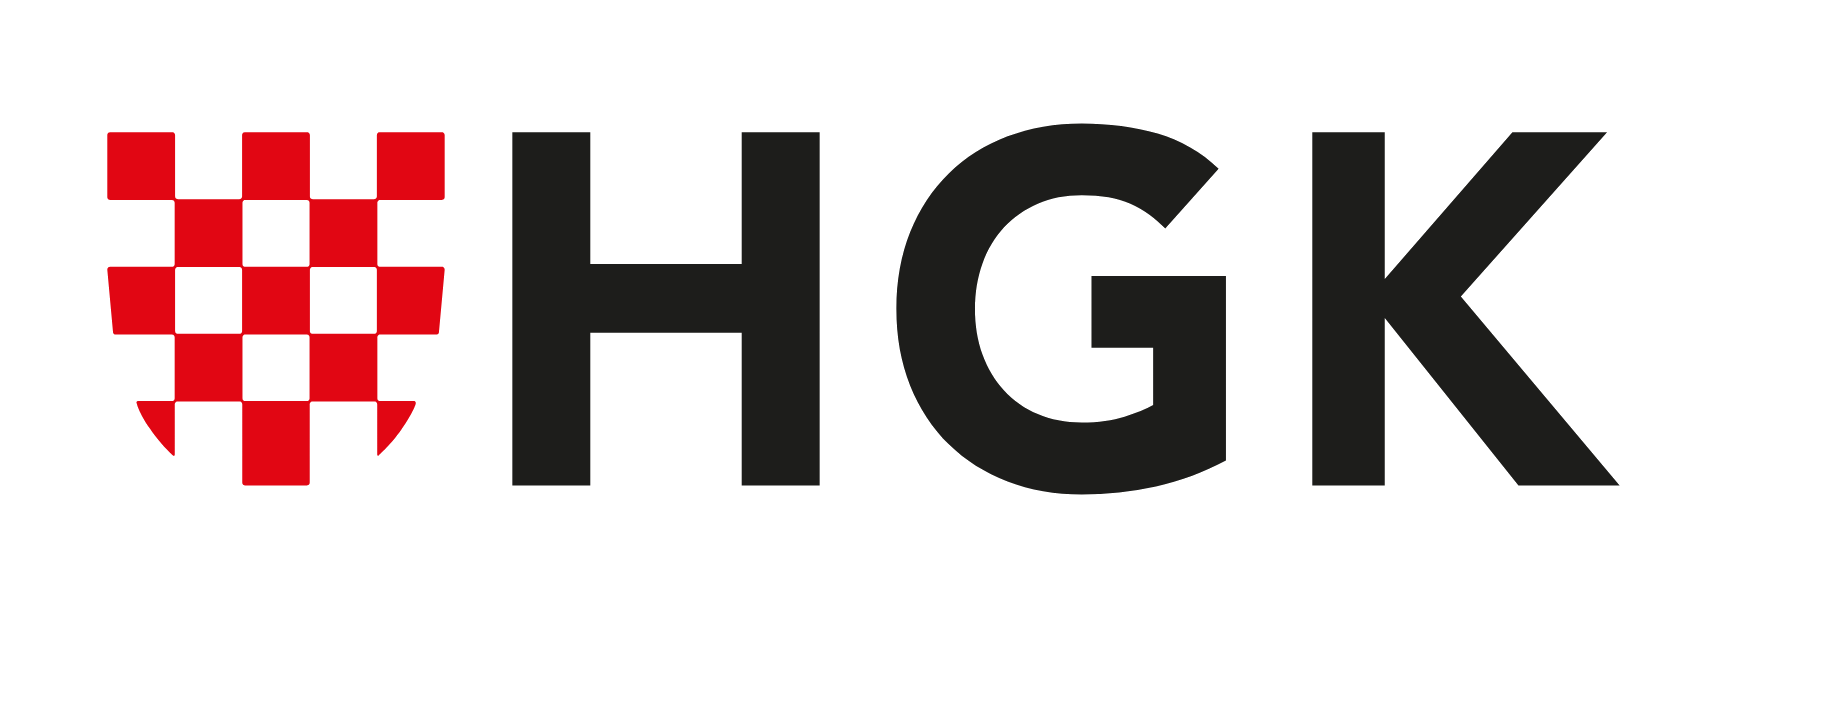 HR-primarni-pozitiv-boja-logo.png